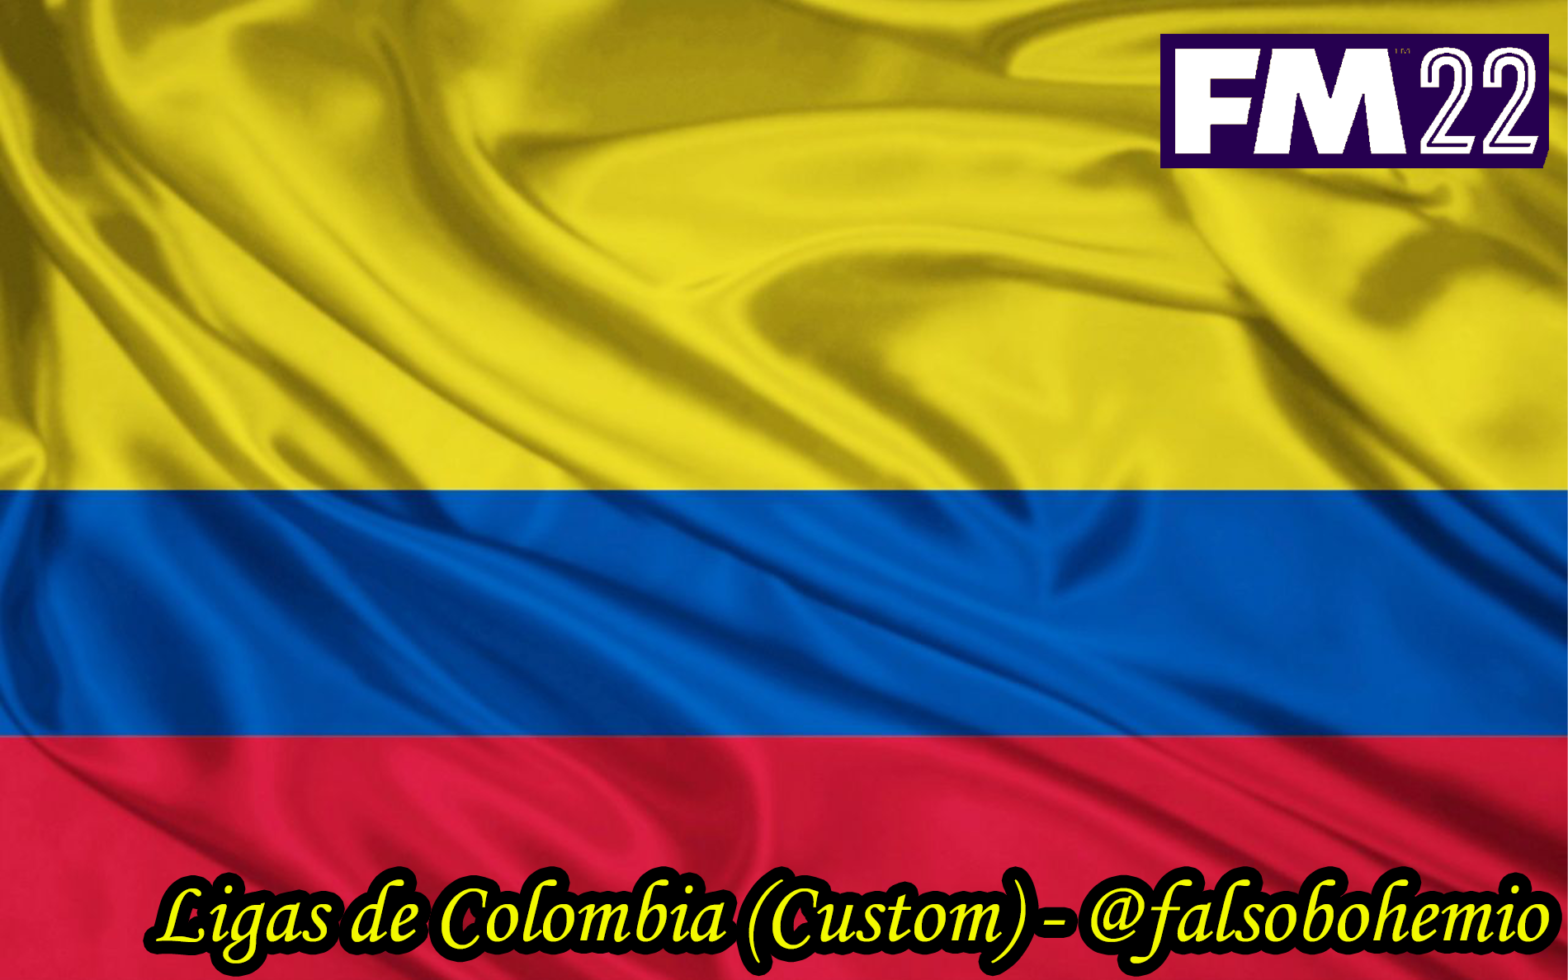 FM22 Colombia base de Datos falsobohemio